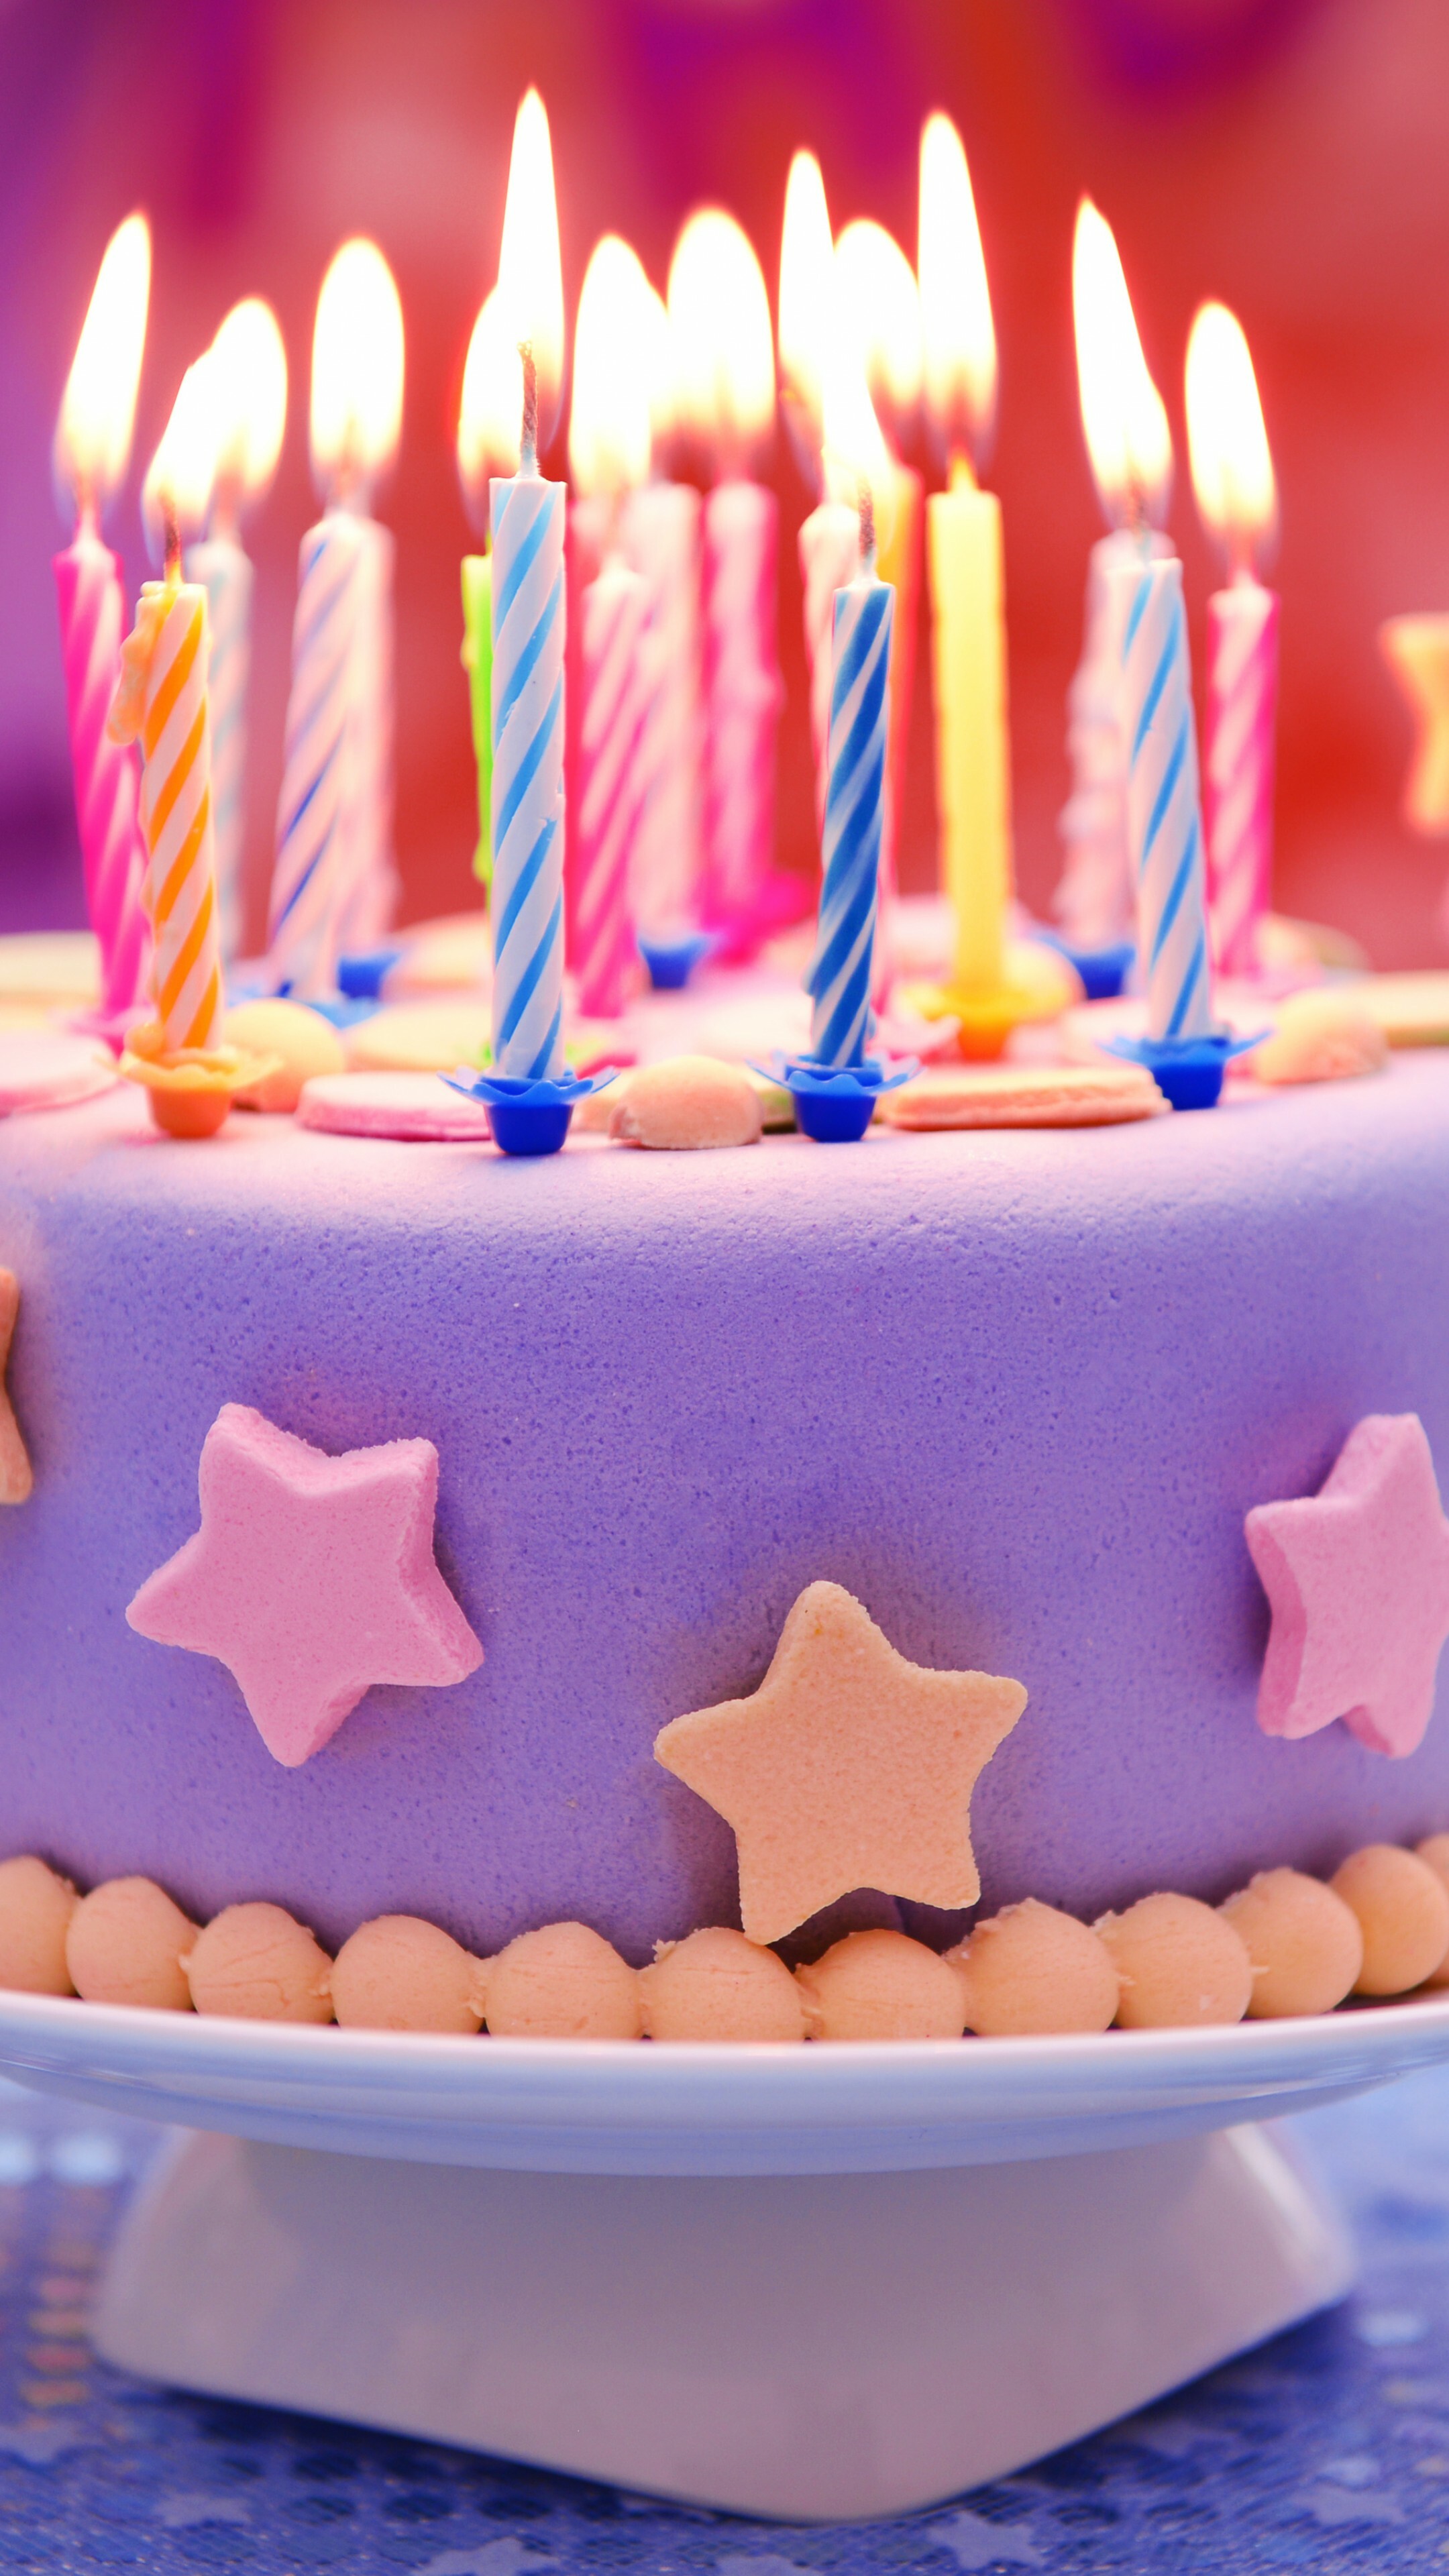 Birthday Party: Celebrating the life of someone, Cake decorating. 2160x3840 4K Background.